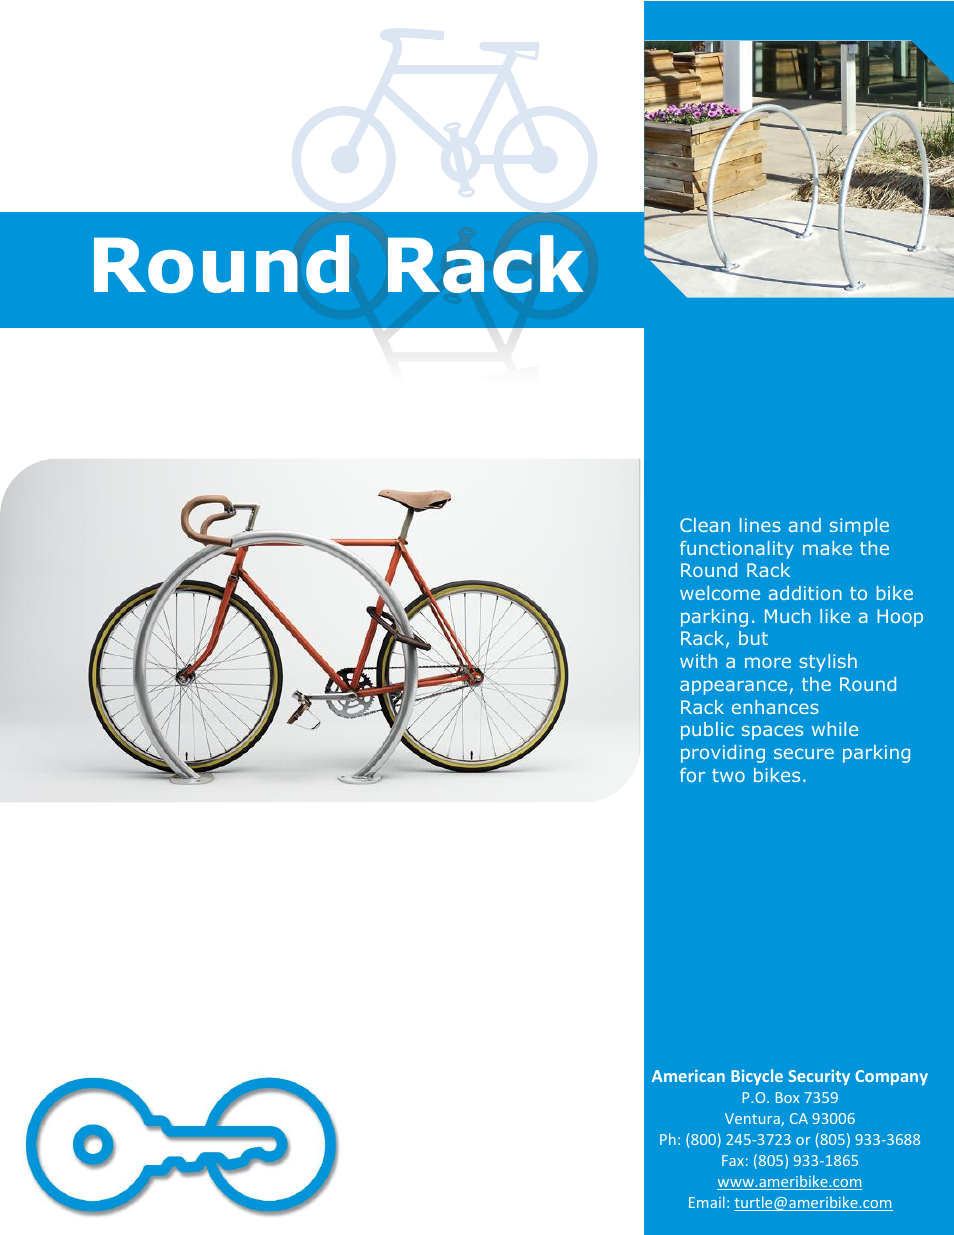 Round Rack